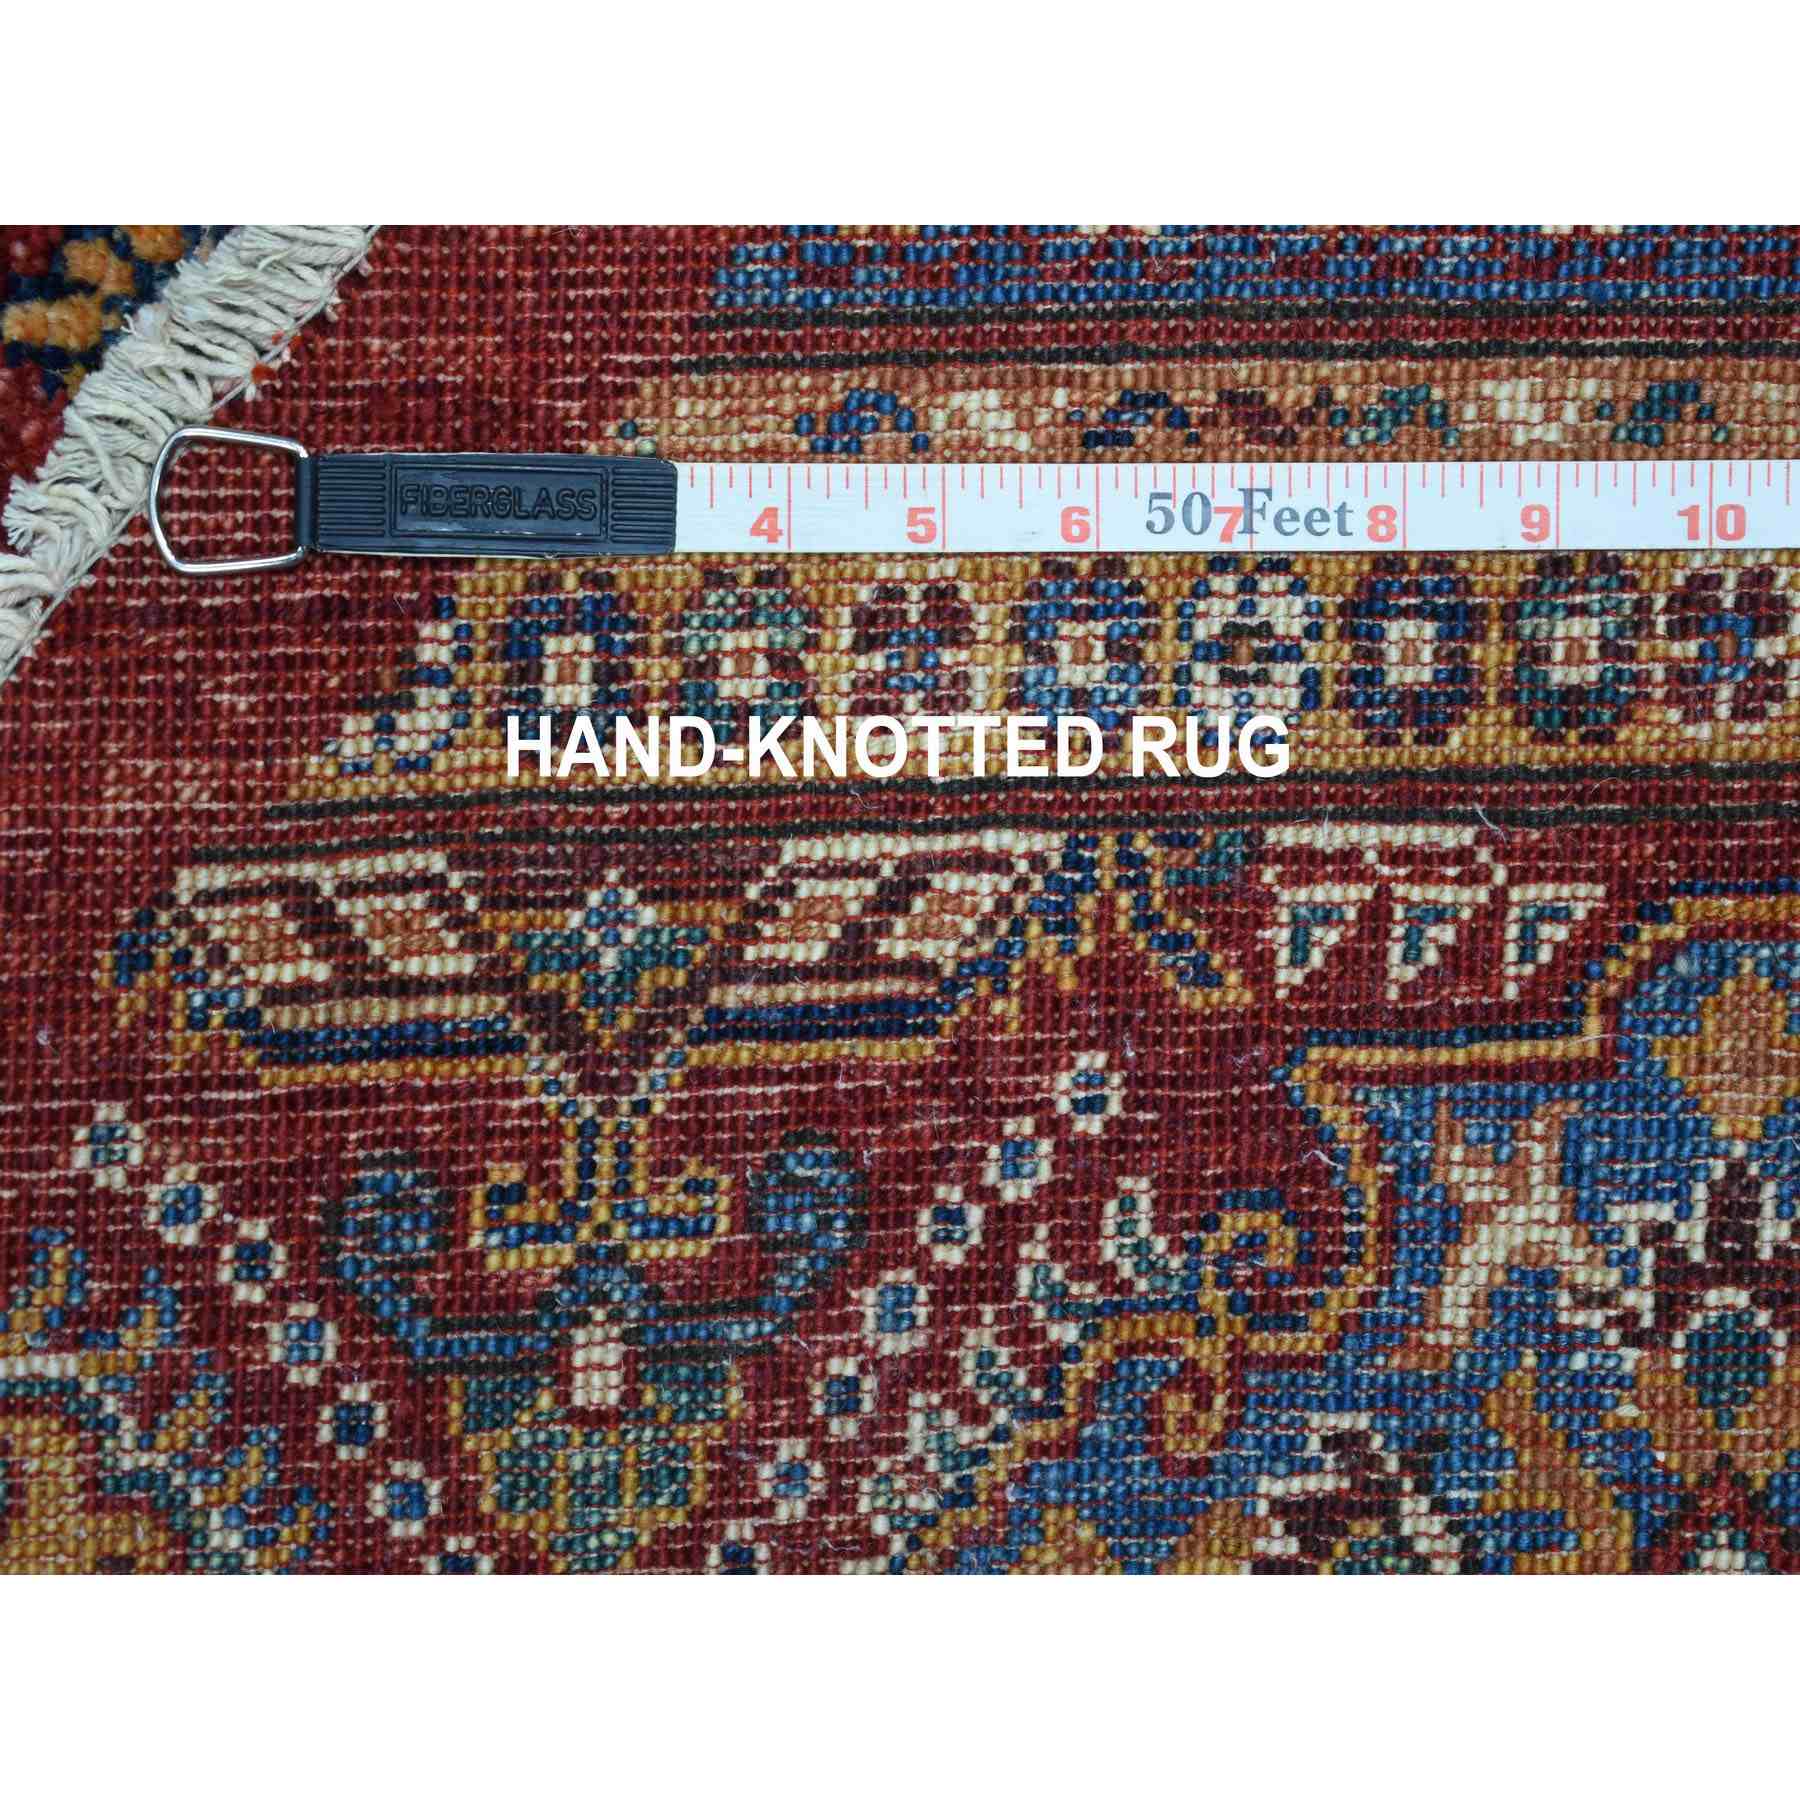 Kazak-Hand-Knotted-Rug-274790